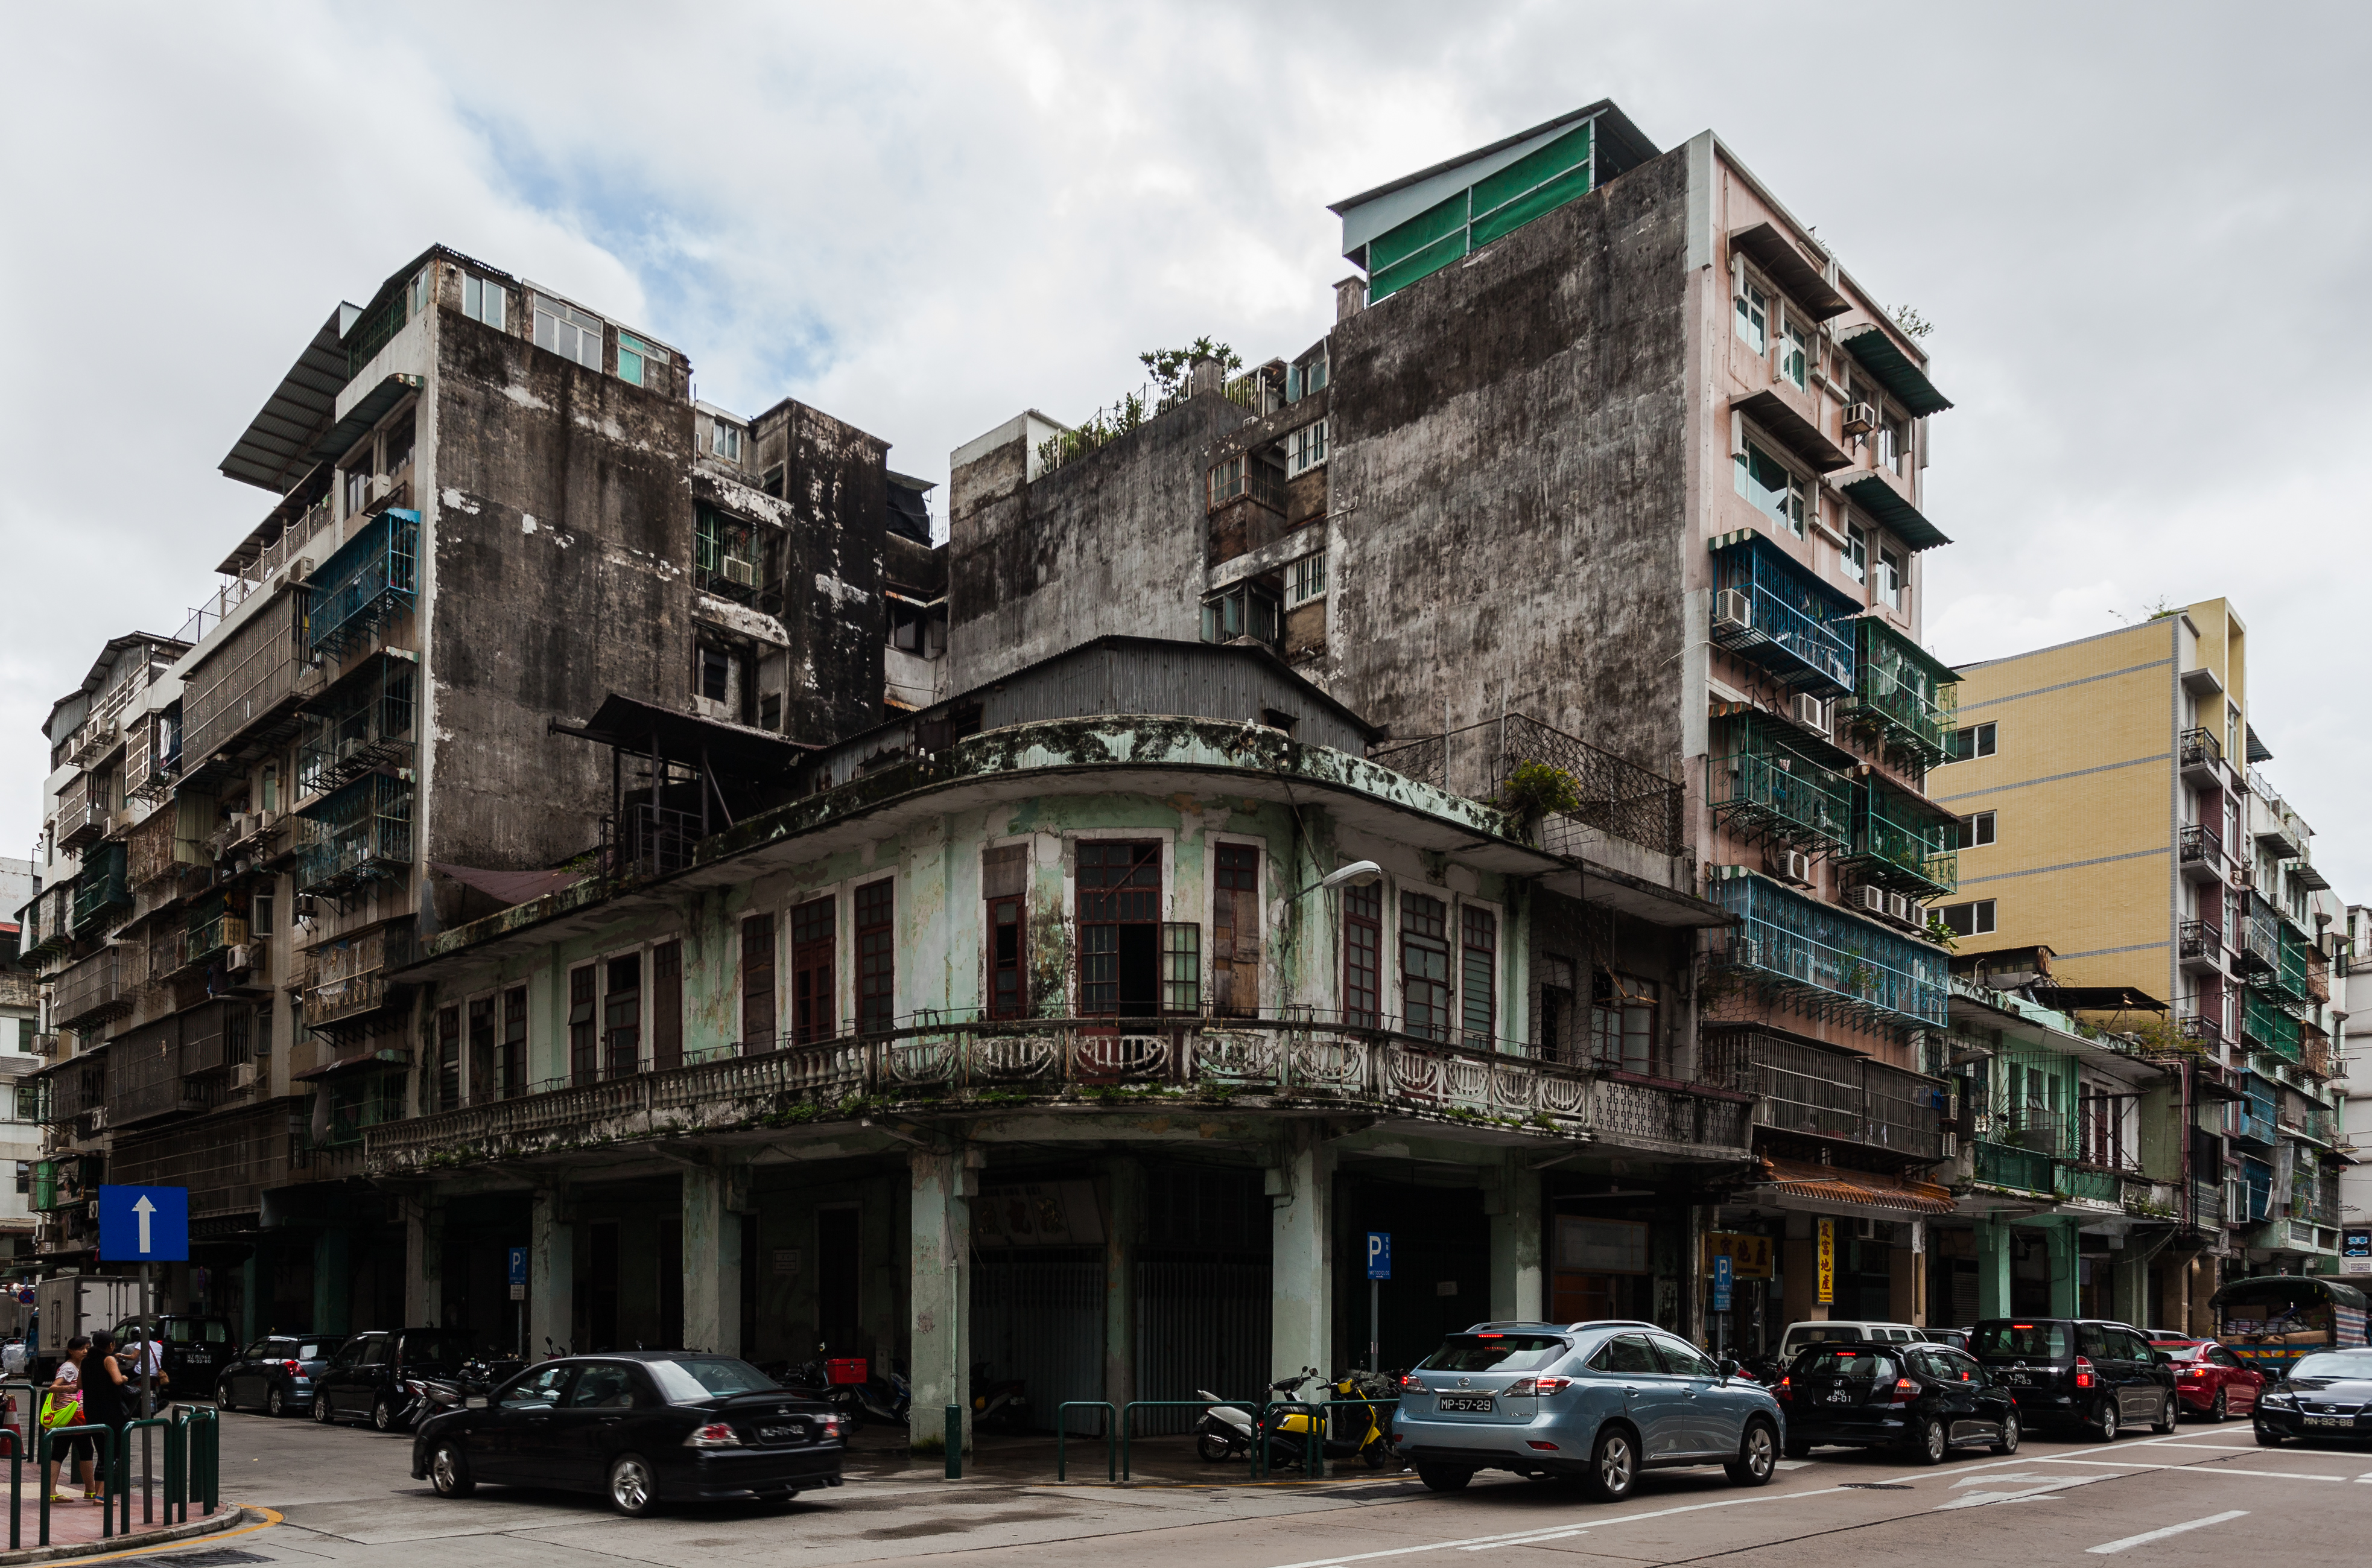 Calles de Macao, 2013-08-08, DD 03